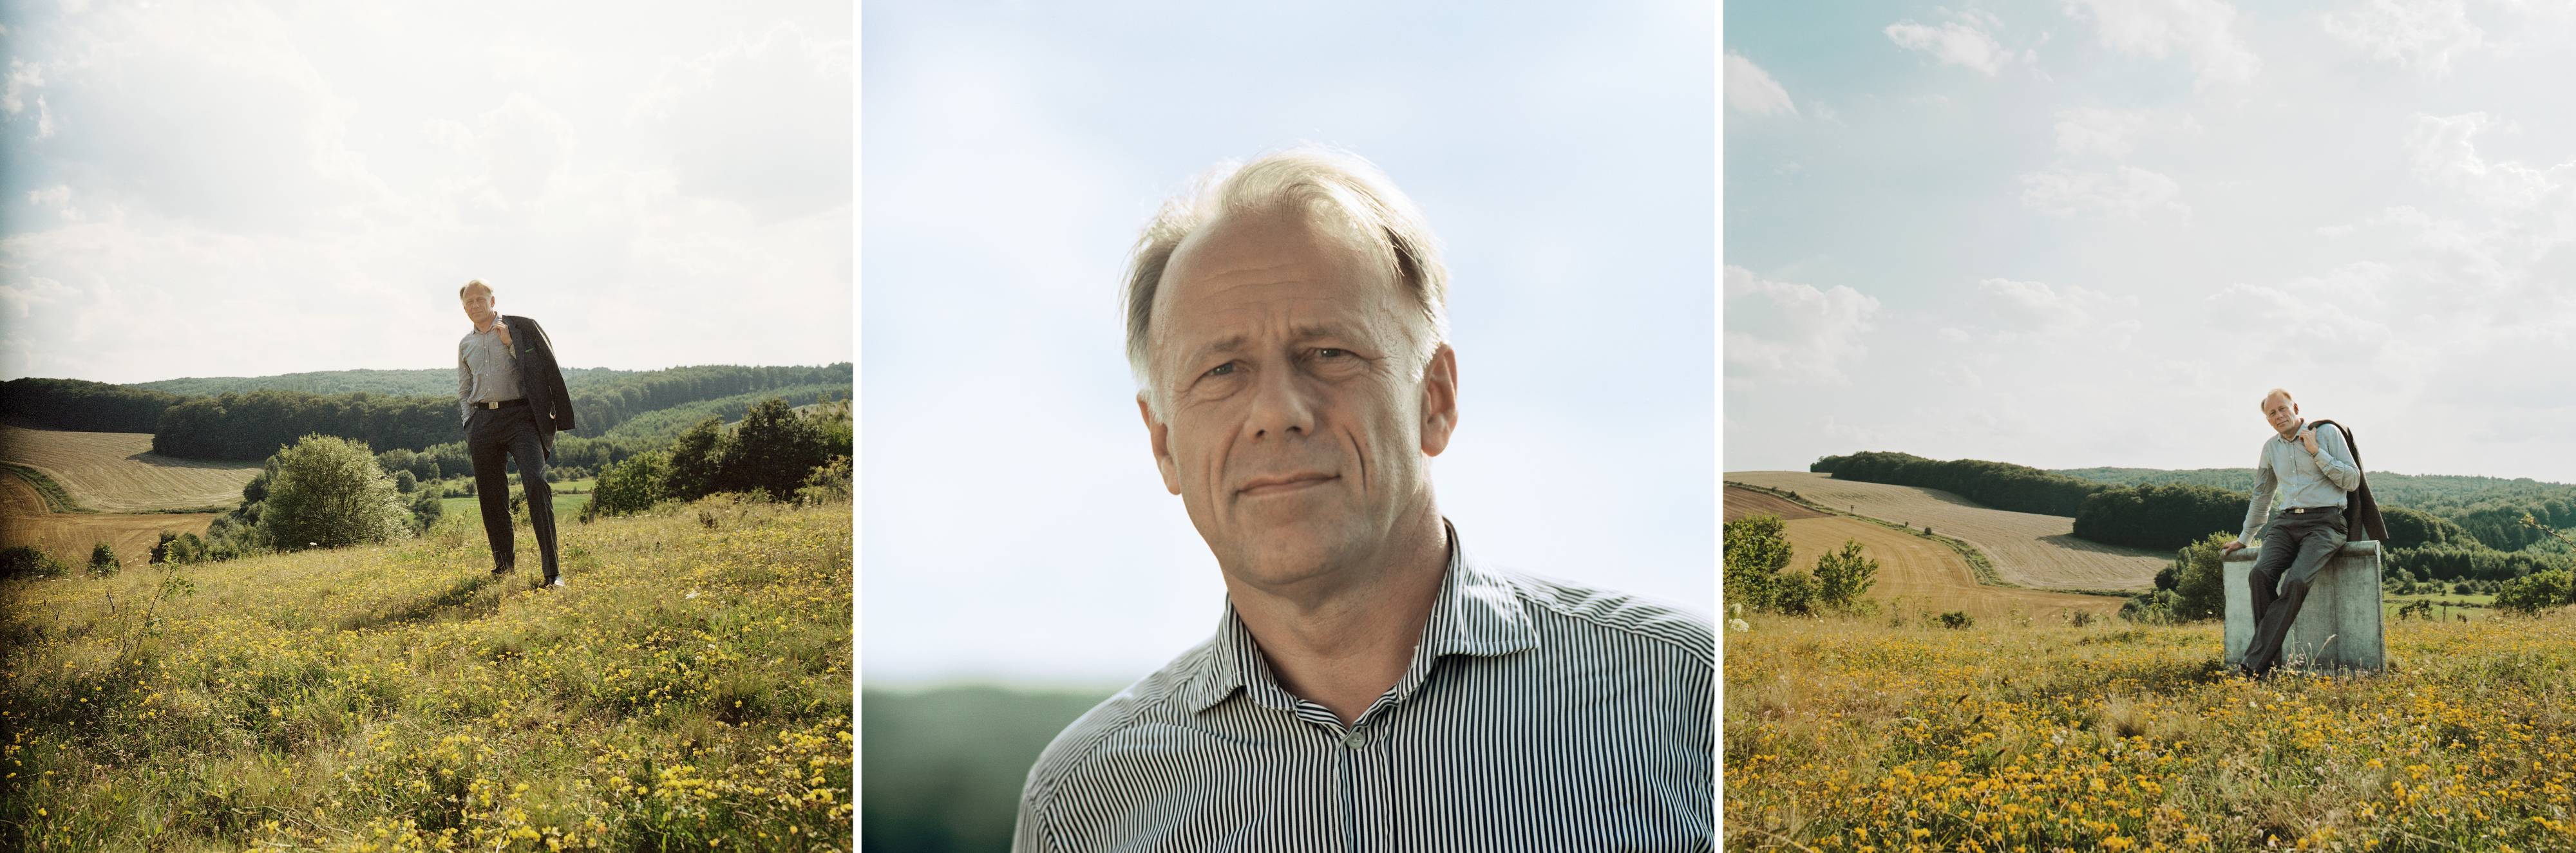 Jürgen Trittin (Bündnis 90/Die Grünen), MdB